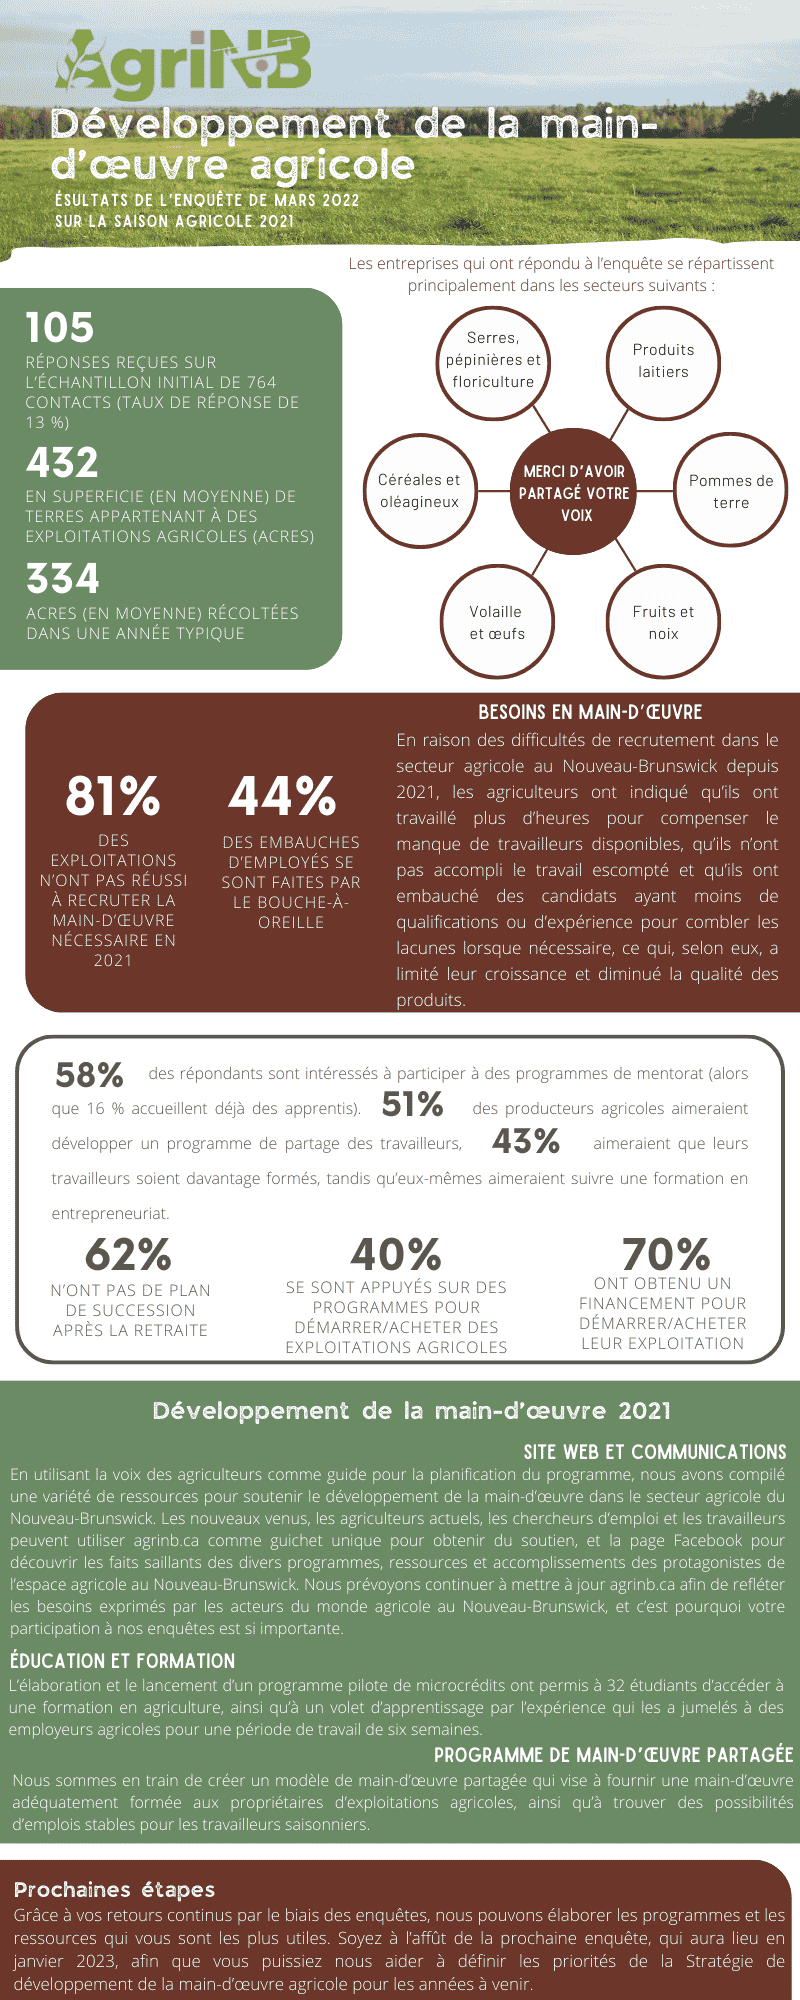 AgriNB survey infographic